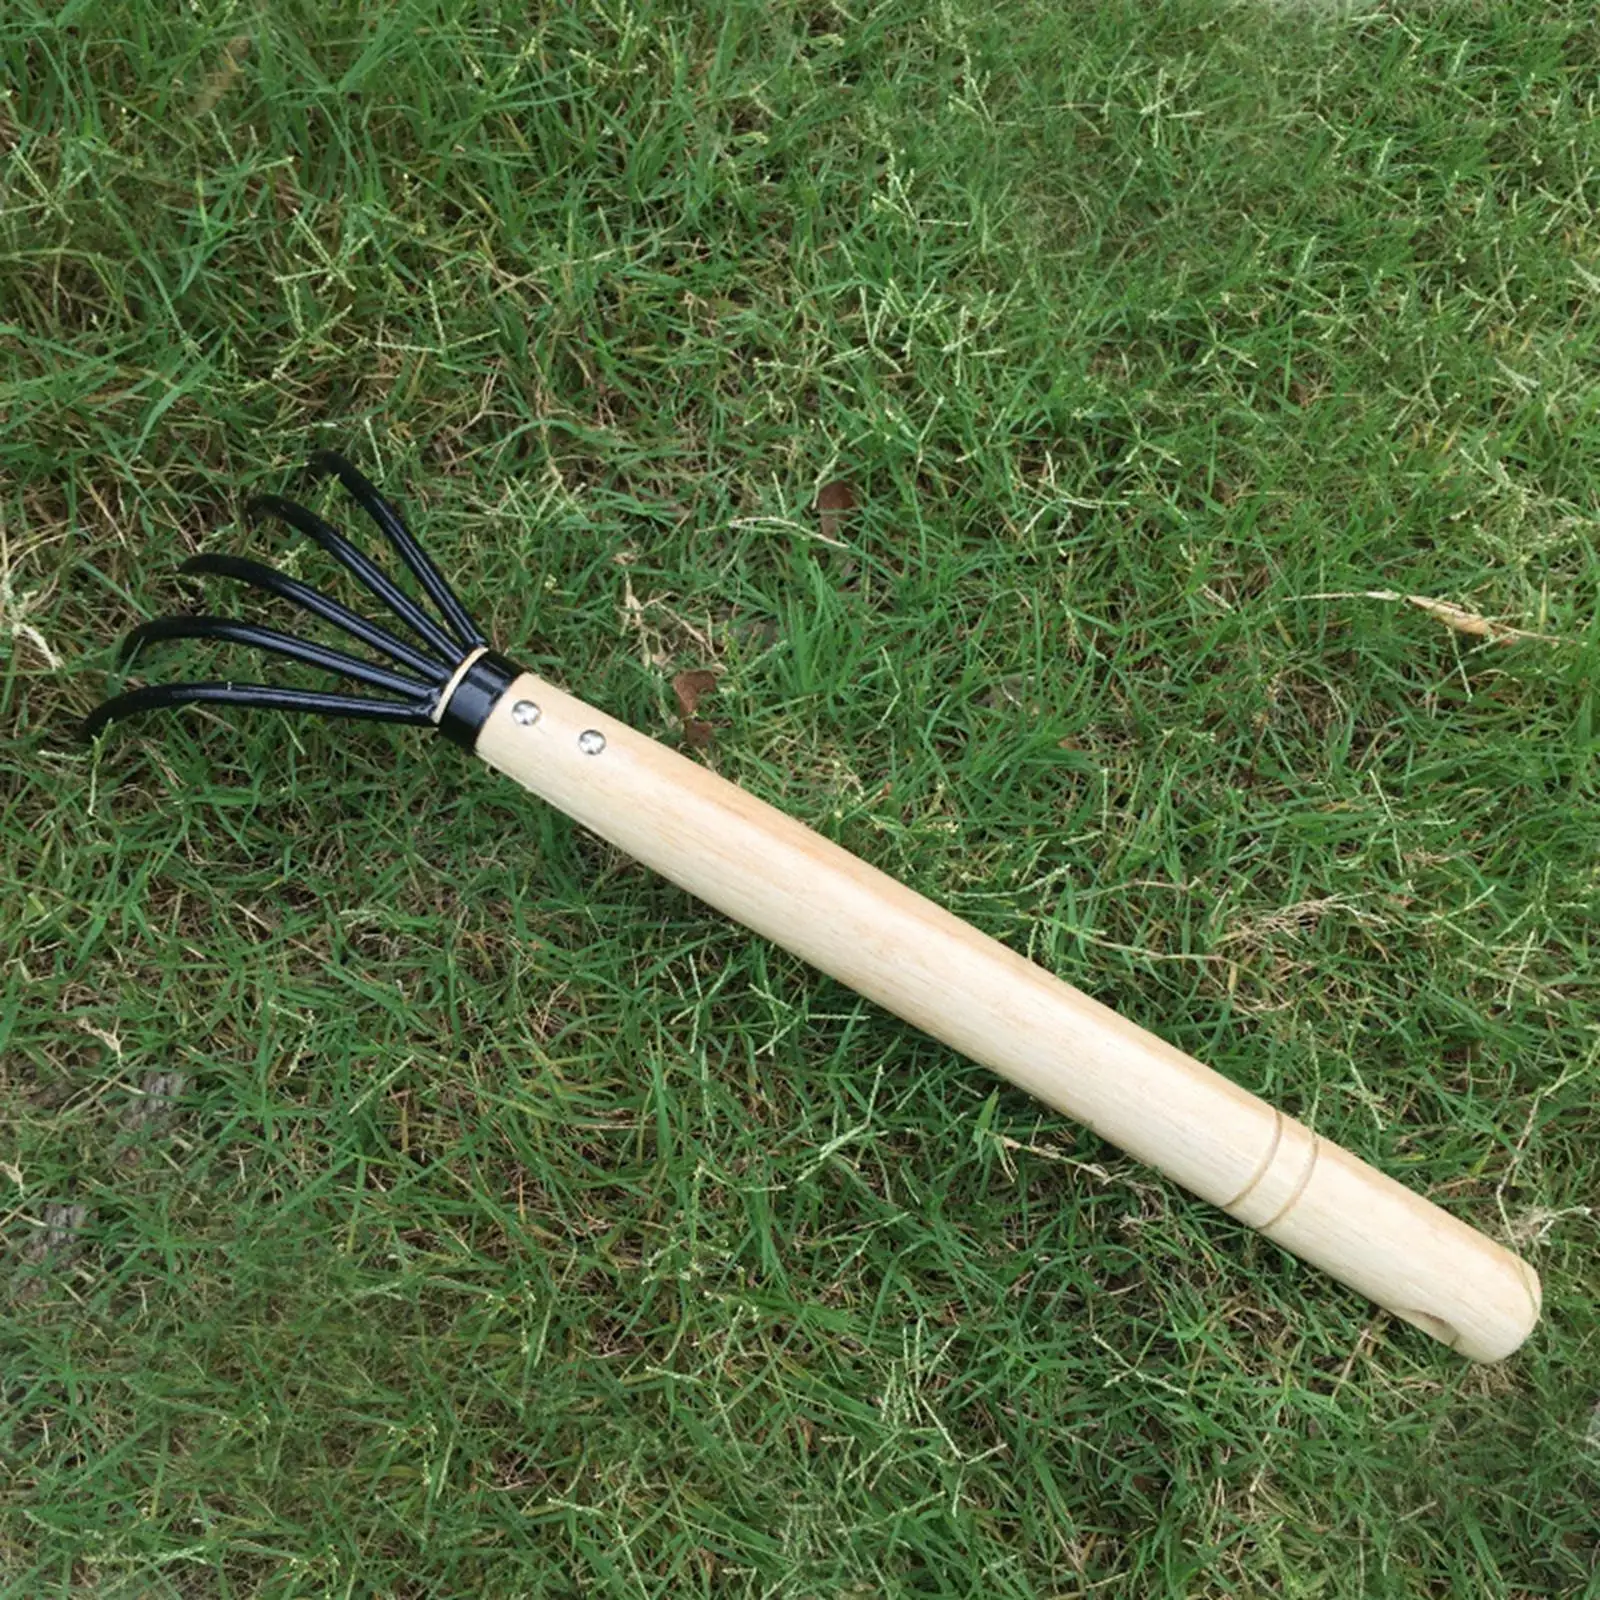 Mutifunctional Garden Rake Professional Small Handheld Garden Gardening Tools Agriculture for Outdoors Loose Soil Digging Lawns